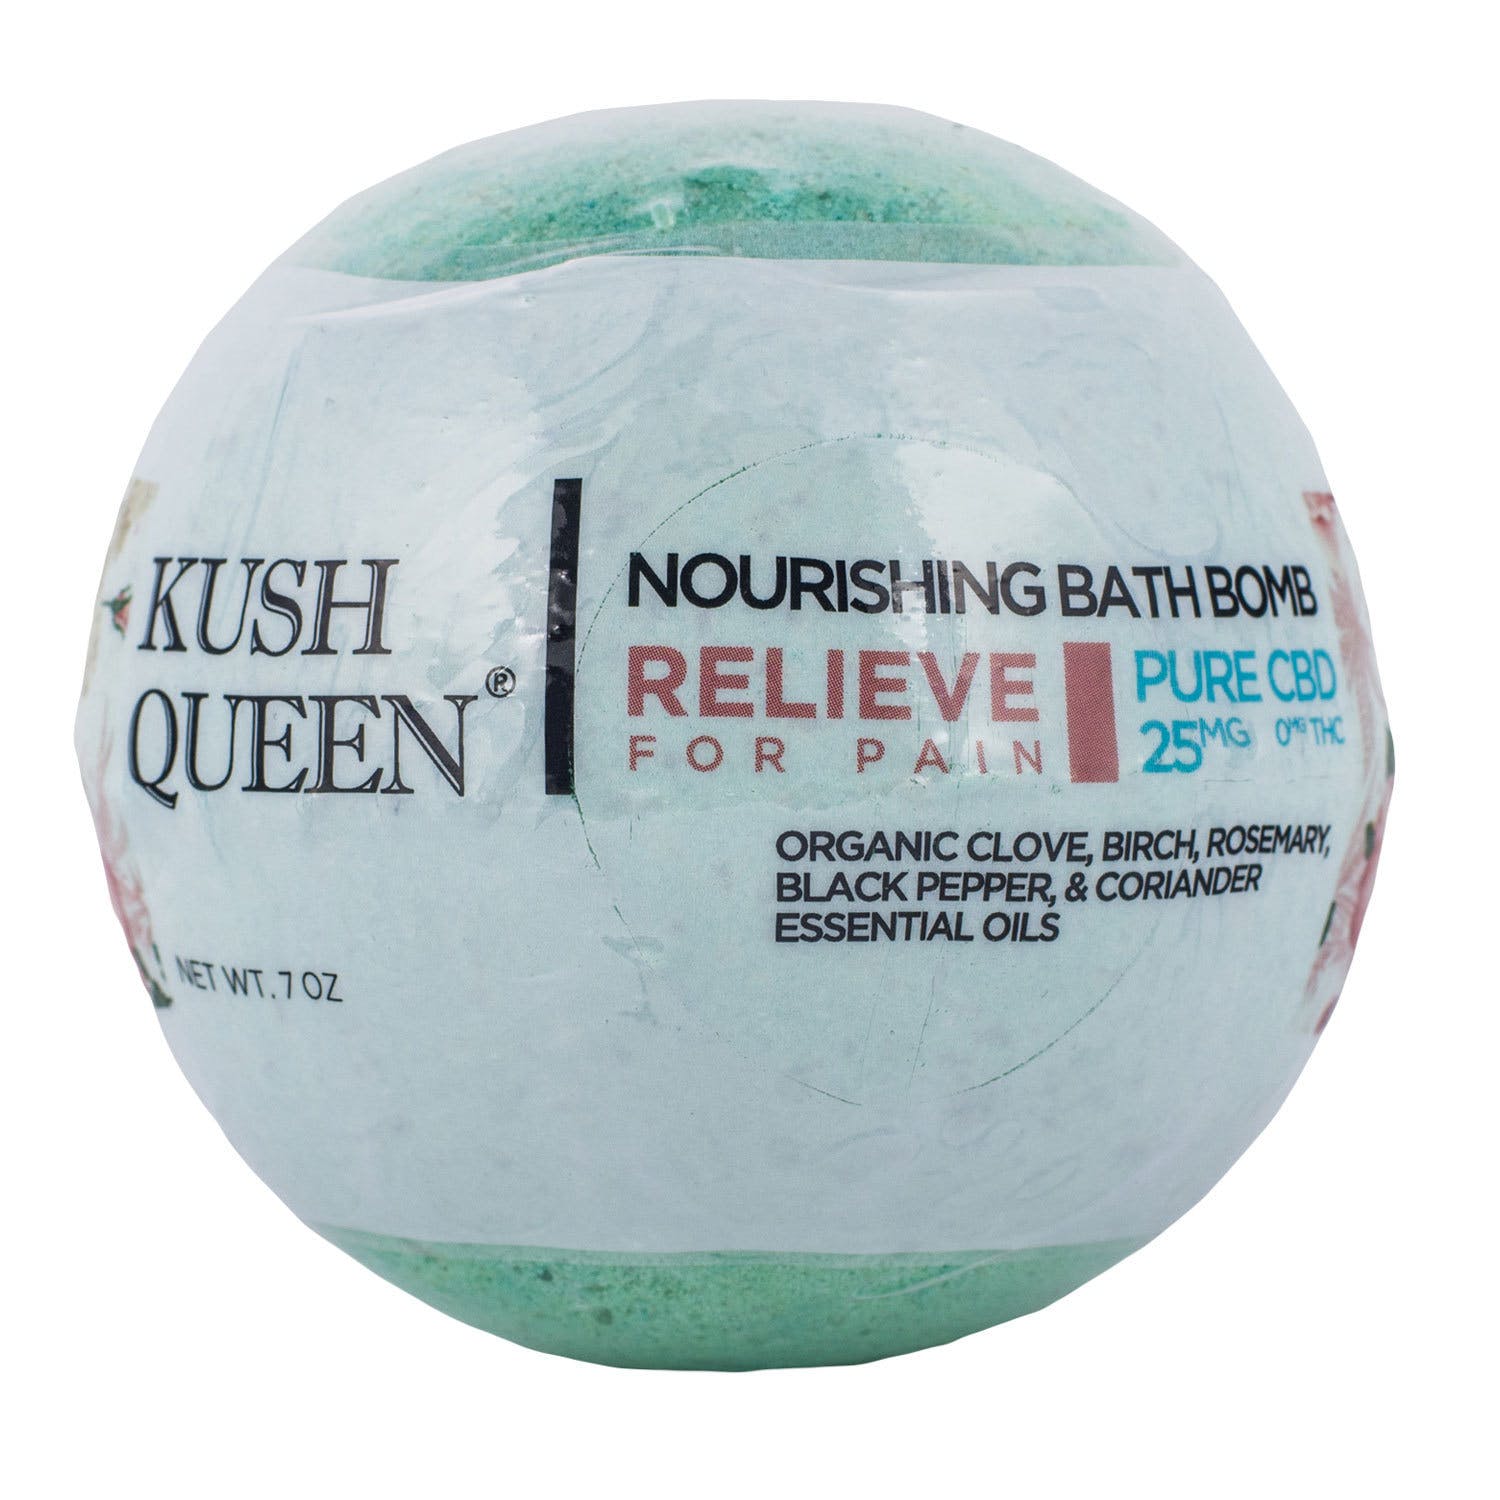 Kush Queen Bath Bomb Relieve CBD 25mg